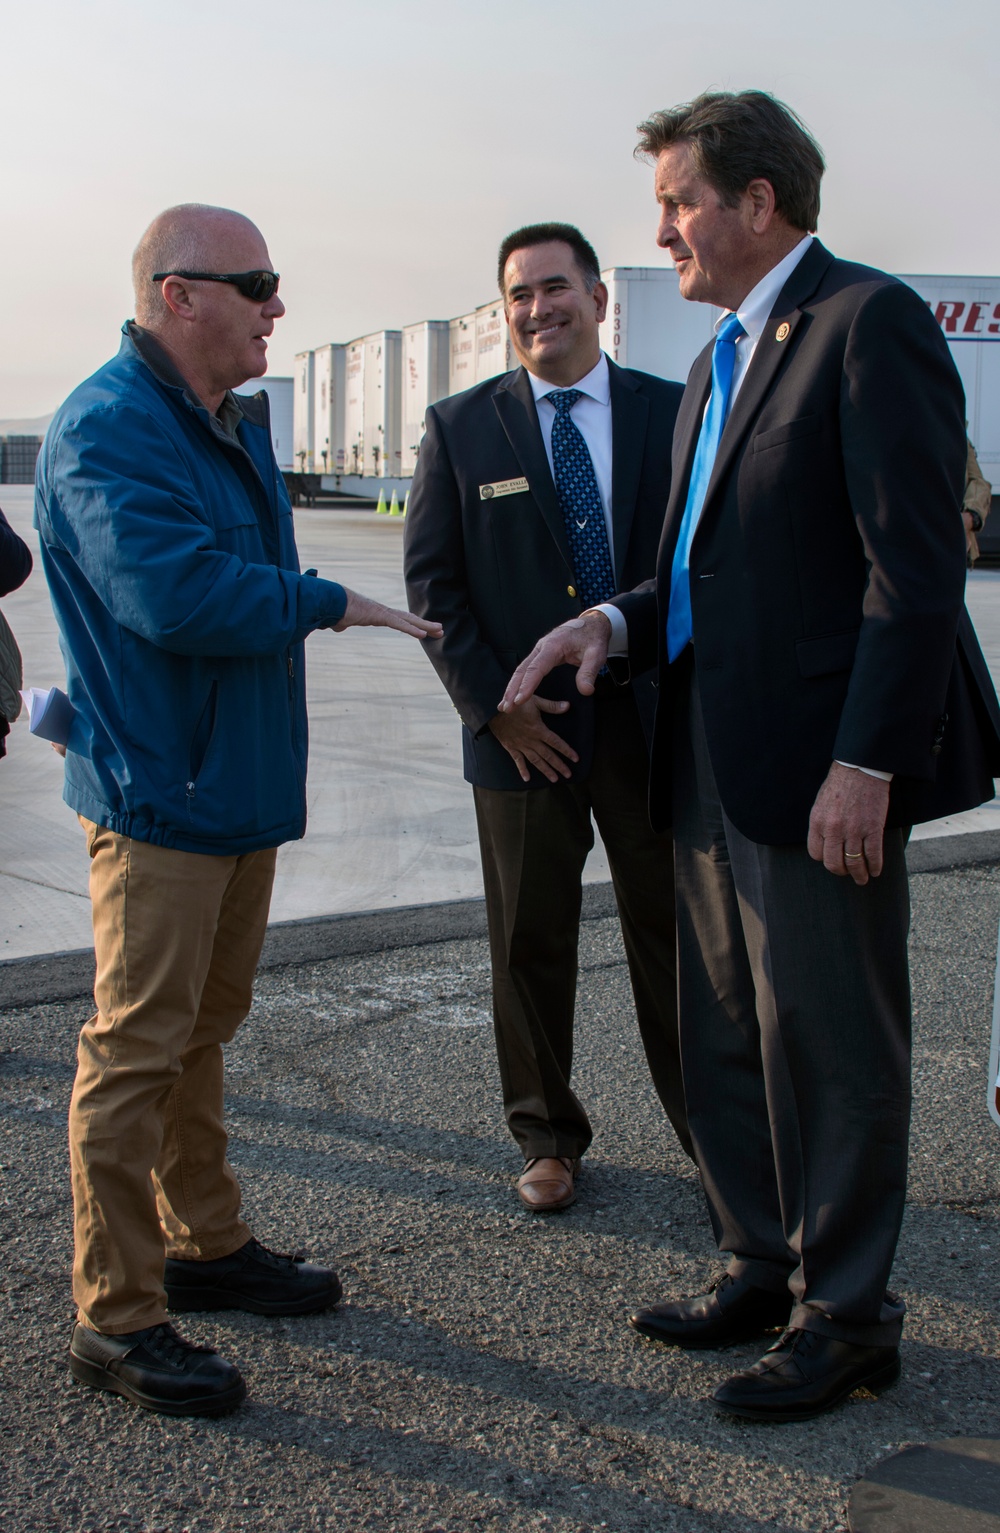 Rep. Garamendi visits Travis for FEMA relief efforts